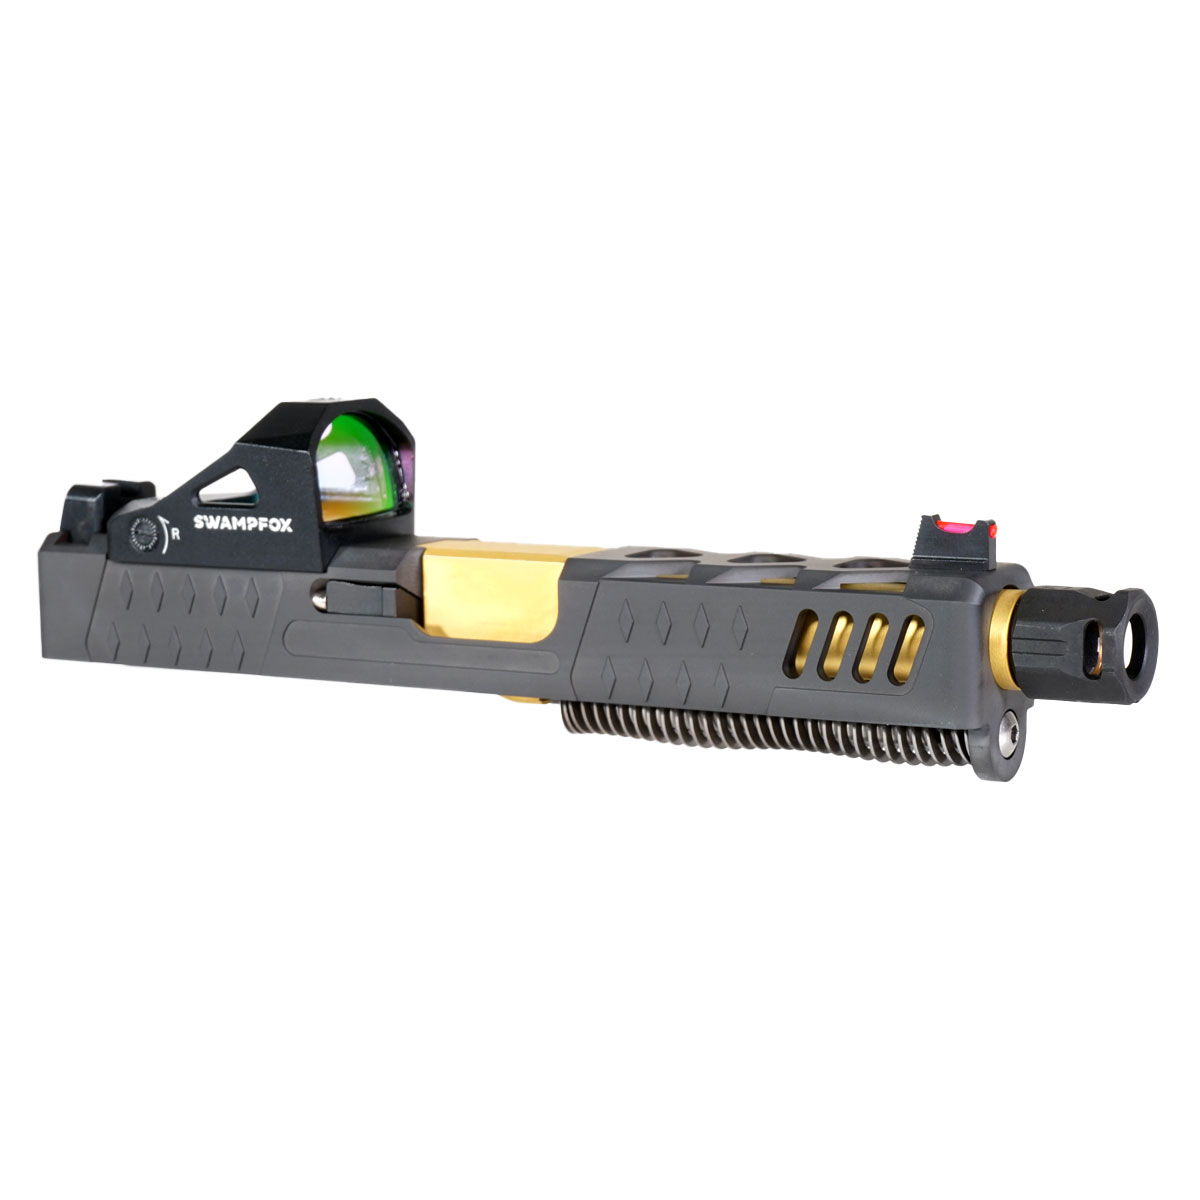 MMC 'Parc Ferme' 9mm Complete Slide Kit - Glock 19 Gen 1-3 Compatible